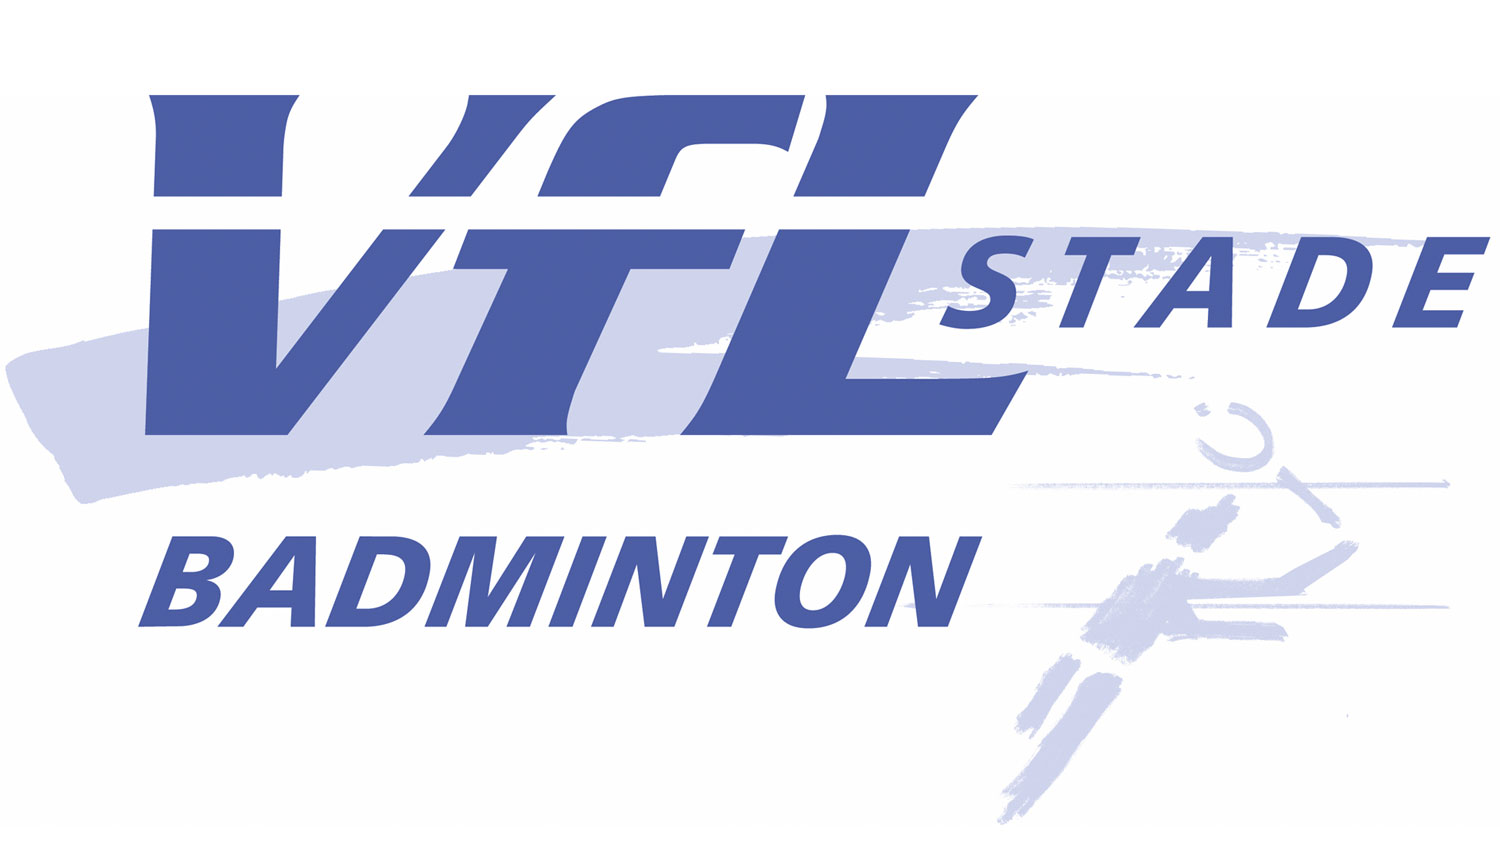 Abteilungslogos_VfL/Badminton_logo.jpg